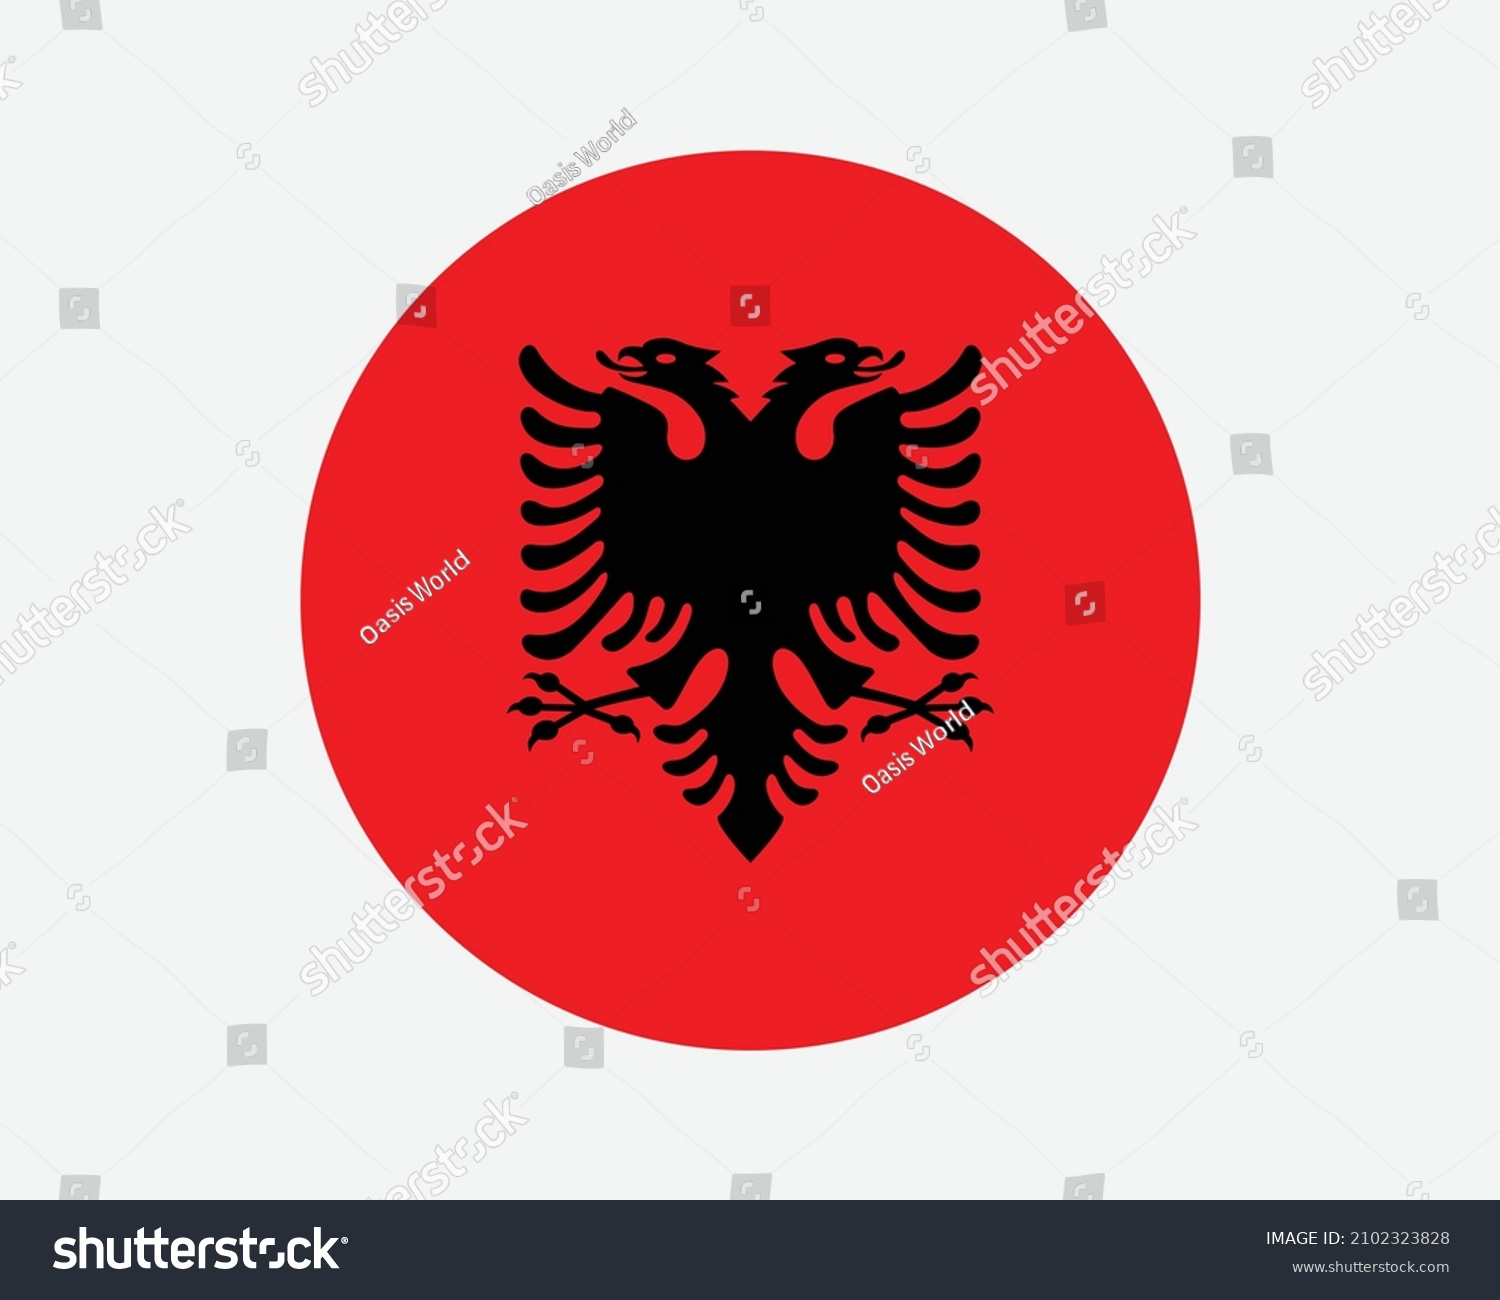 SVG of Albania Round Country Flag. Circular Albanian National Flag. Republic of Albania Circle Shape Button Banner. EPS Vector Illustration. svg